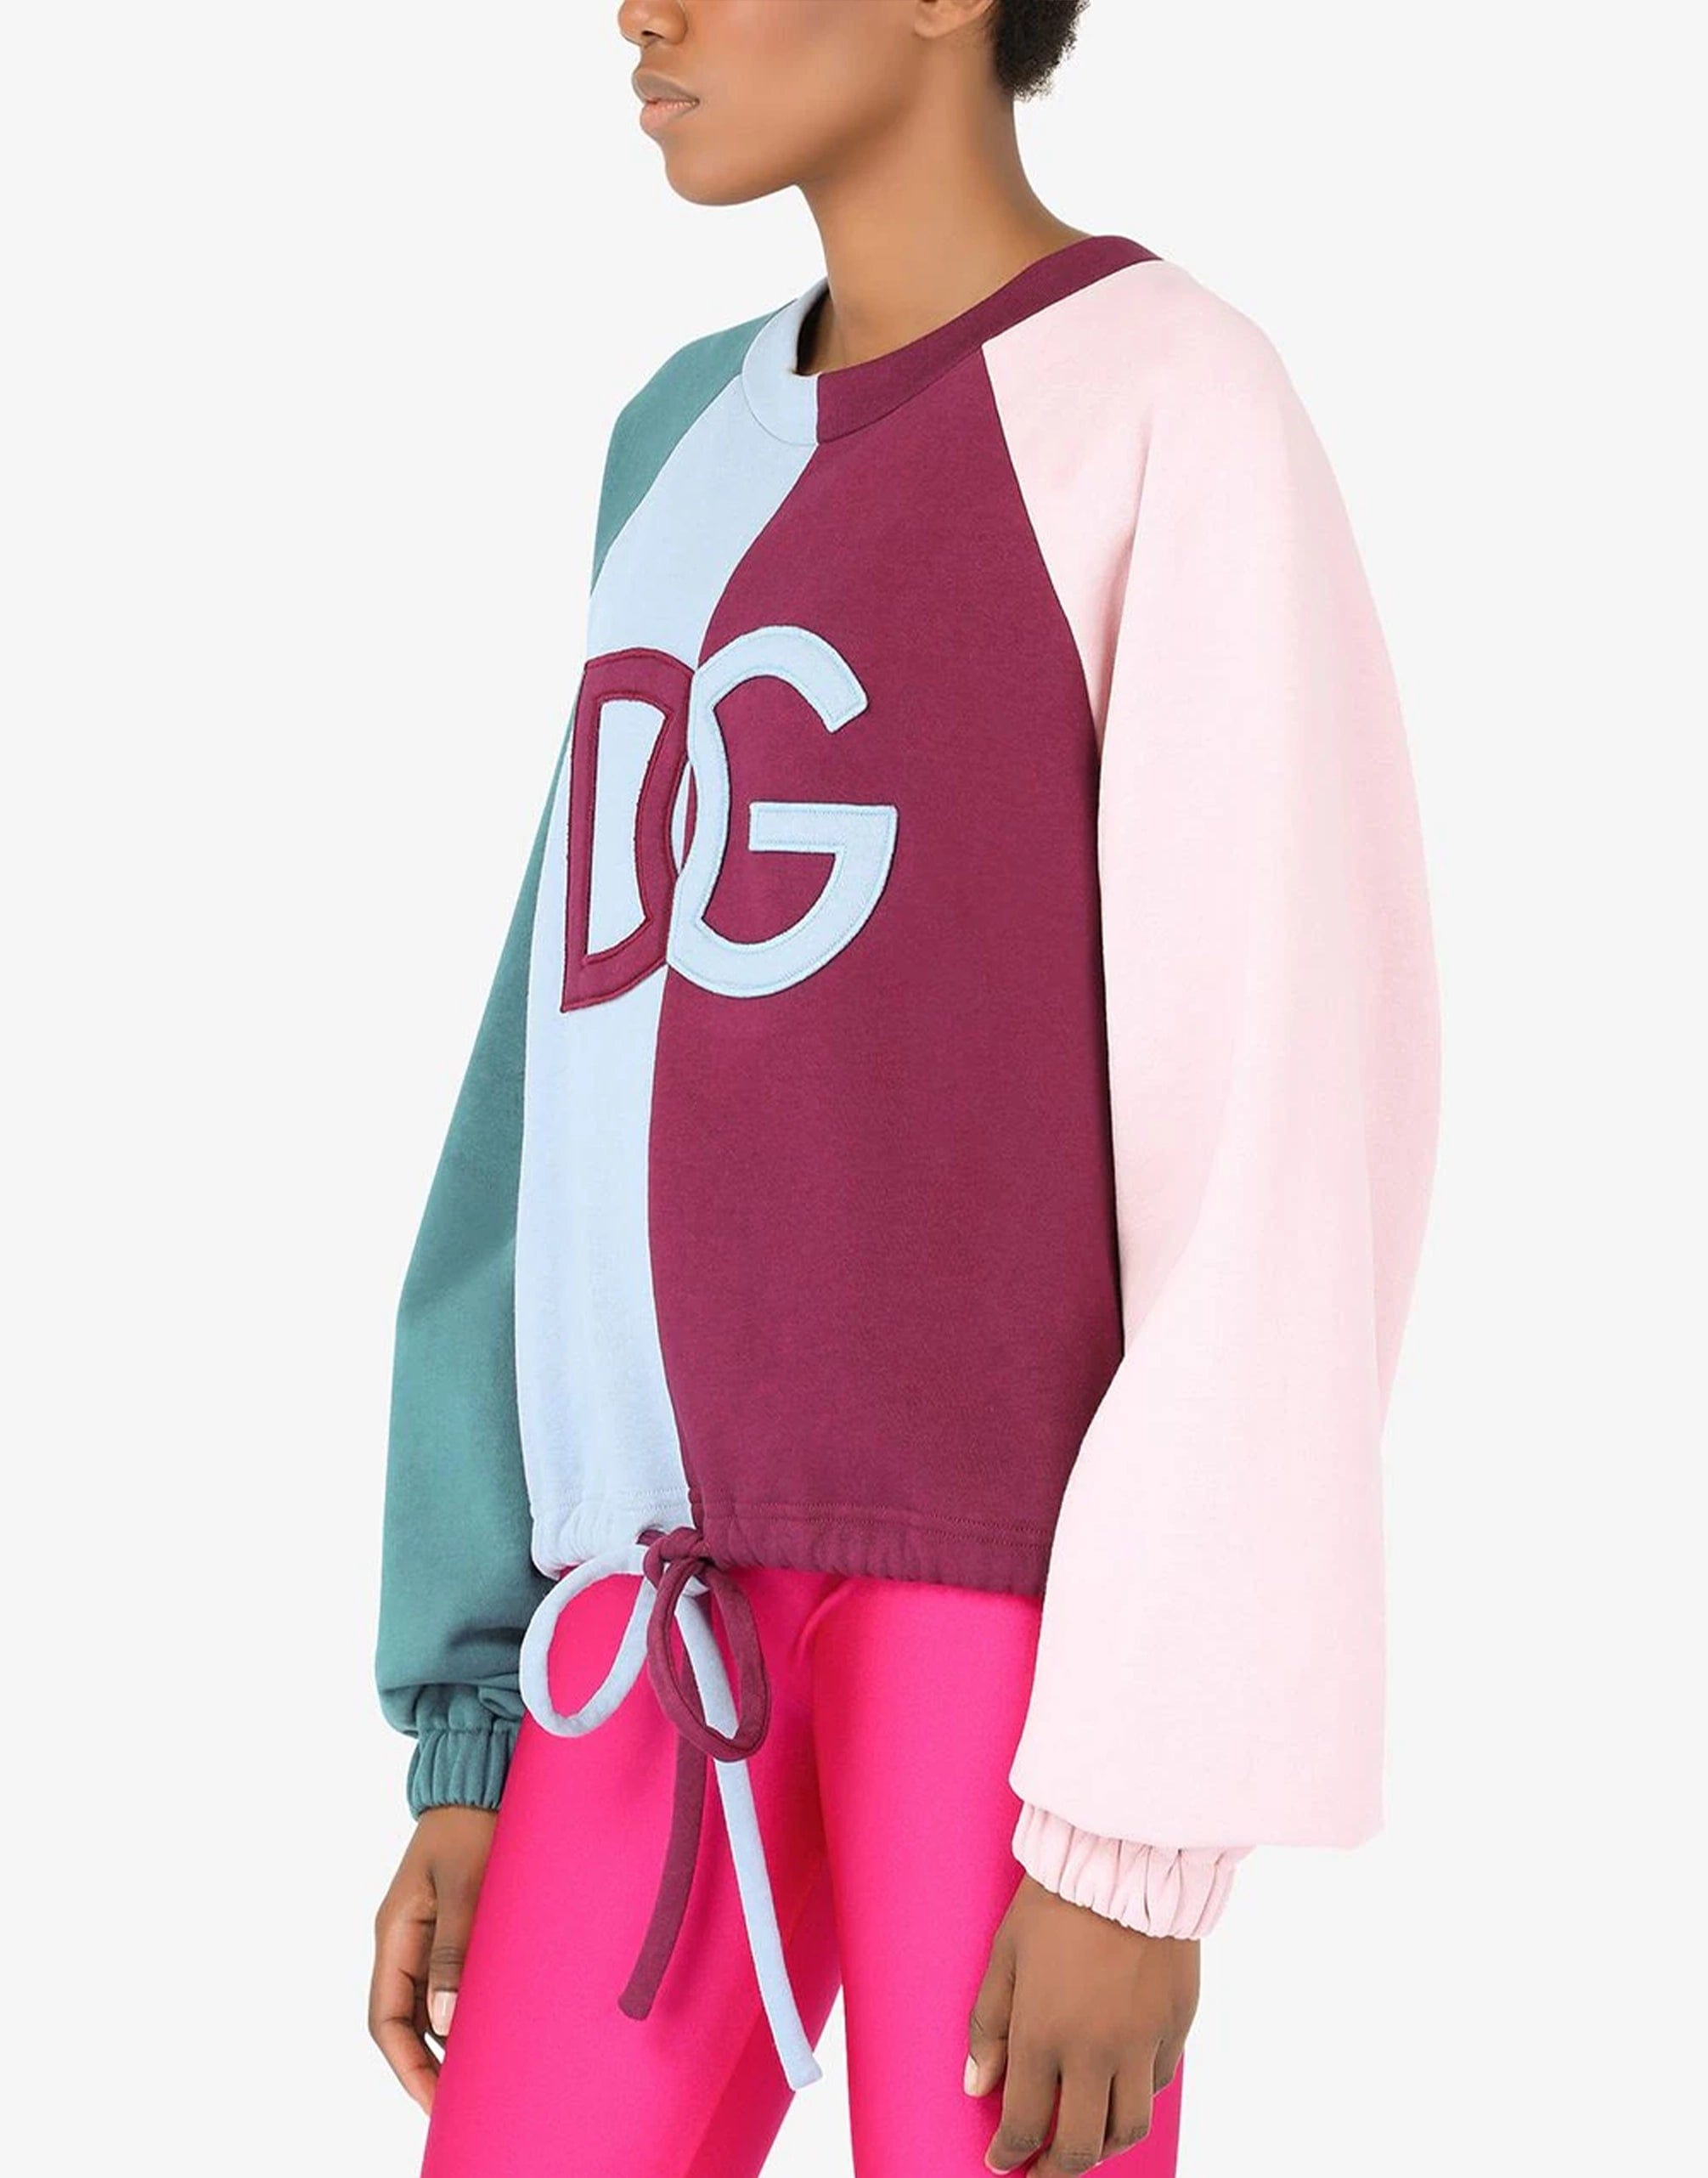 Jersey Patchwork Sweatshirt With DG Lettering